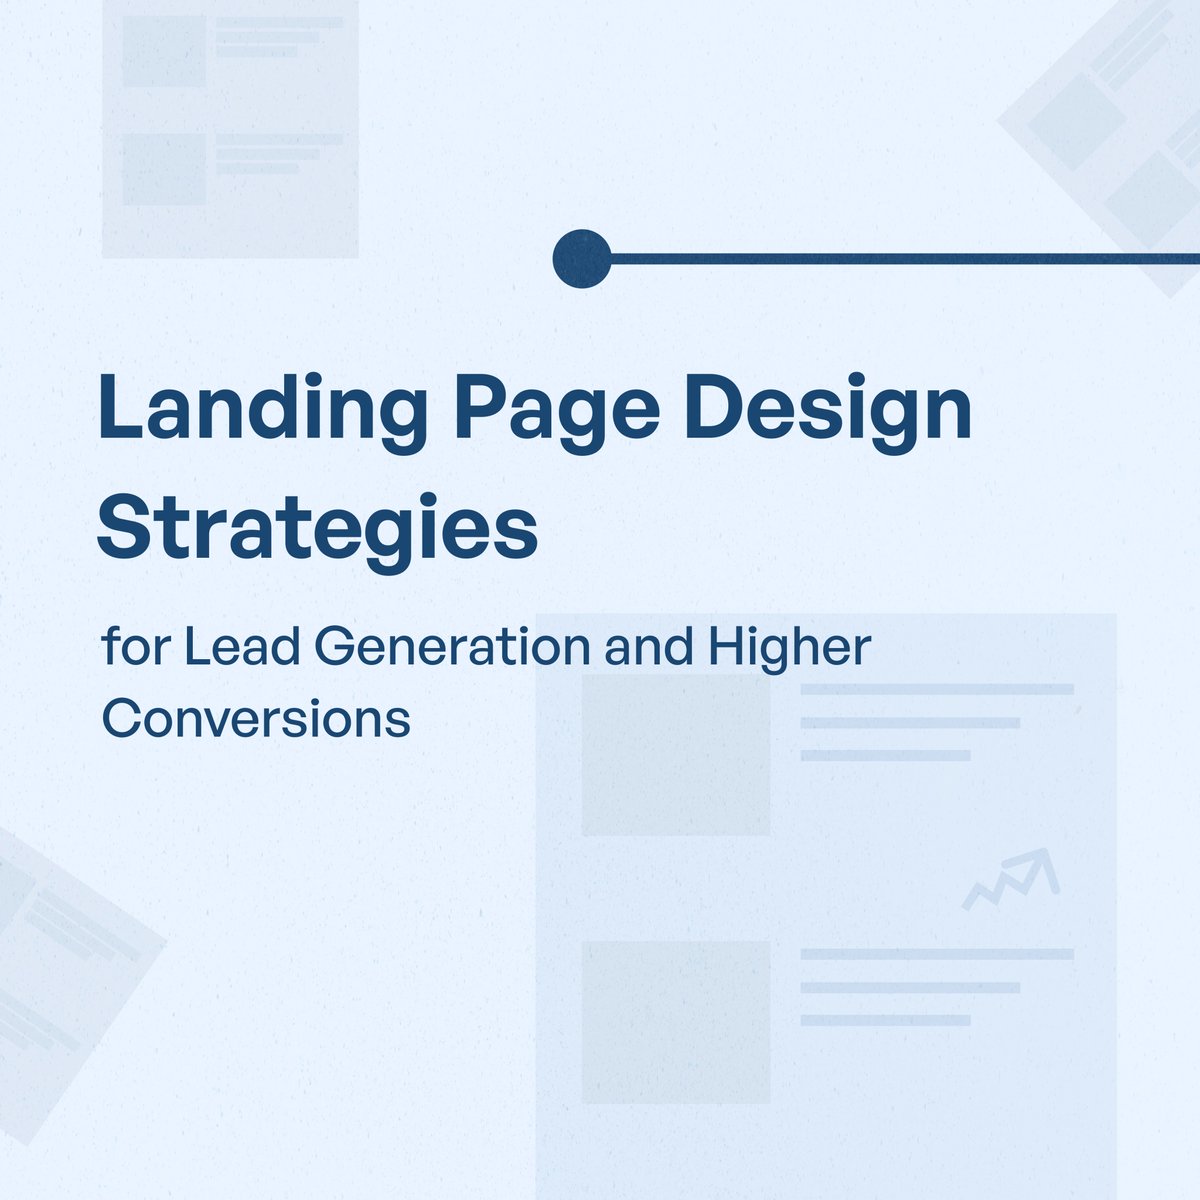 4 Landing Page Design Strategies for Higher Conversions and Lead Generation 

#landingpagedesign #designstrategy #cta #calltoaction #copywriting #webdesignerinabuja #webdesign #webdesignerinnigeria #saletips #AbujaTwitterCommunity #conversions